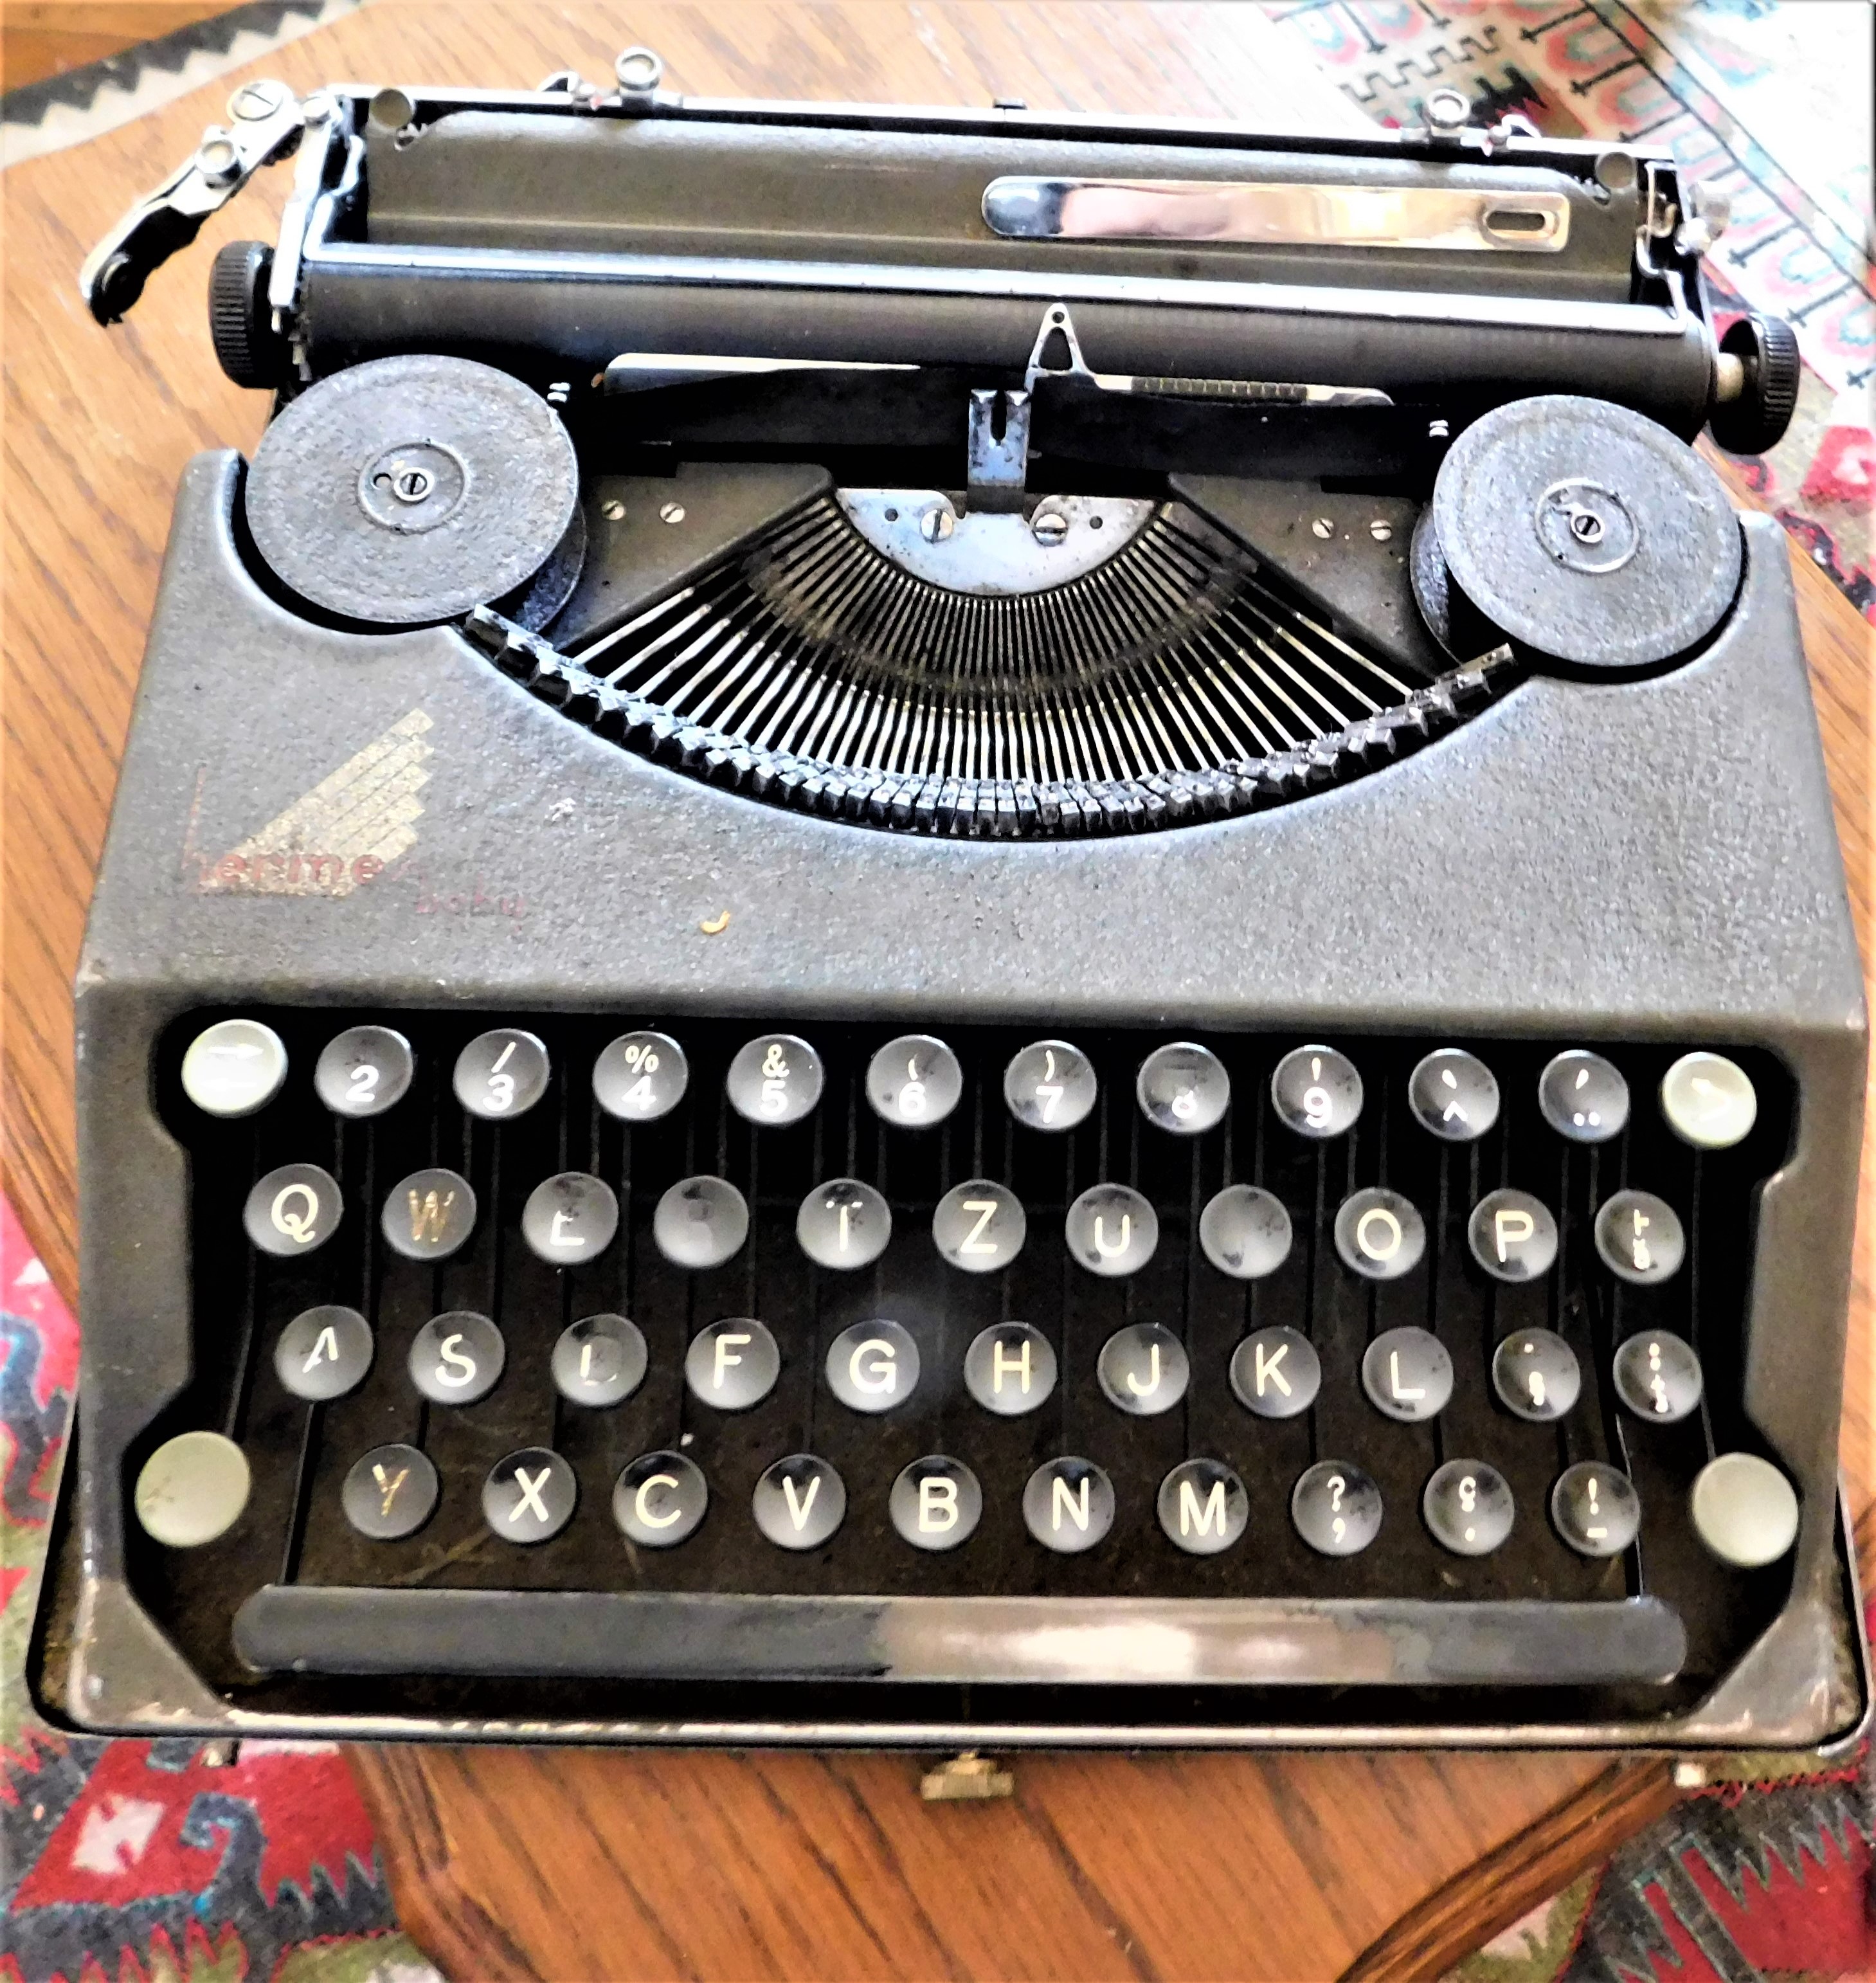 Alexandru Călinescu's Swiss Hermes Baby typewriter